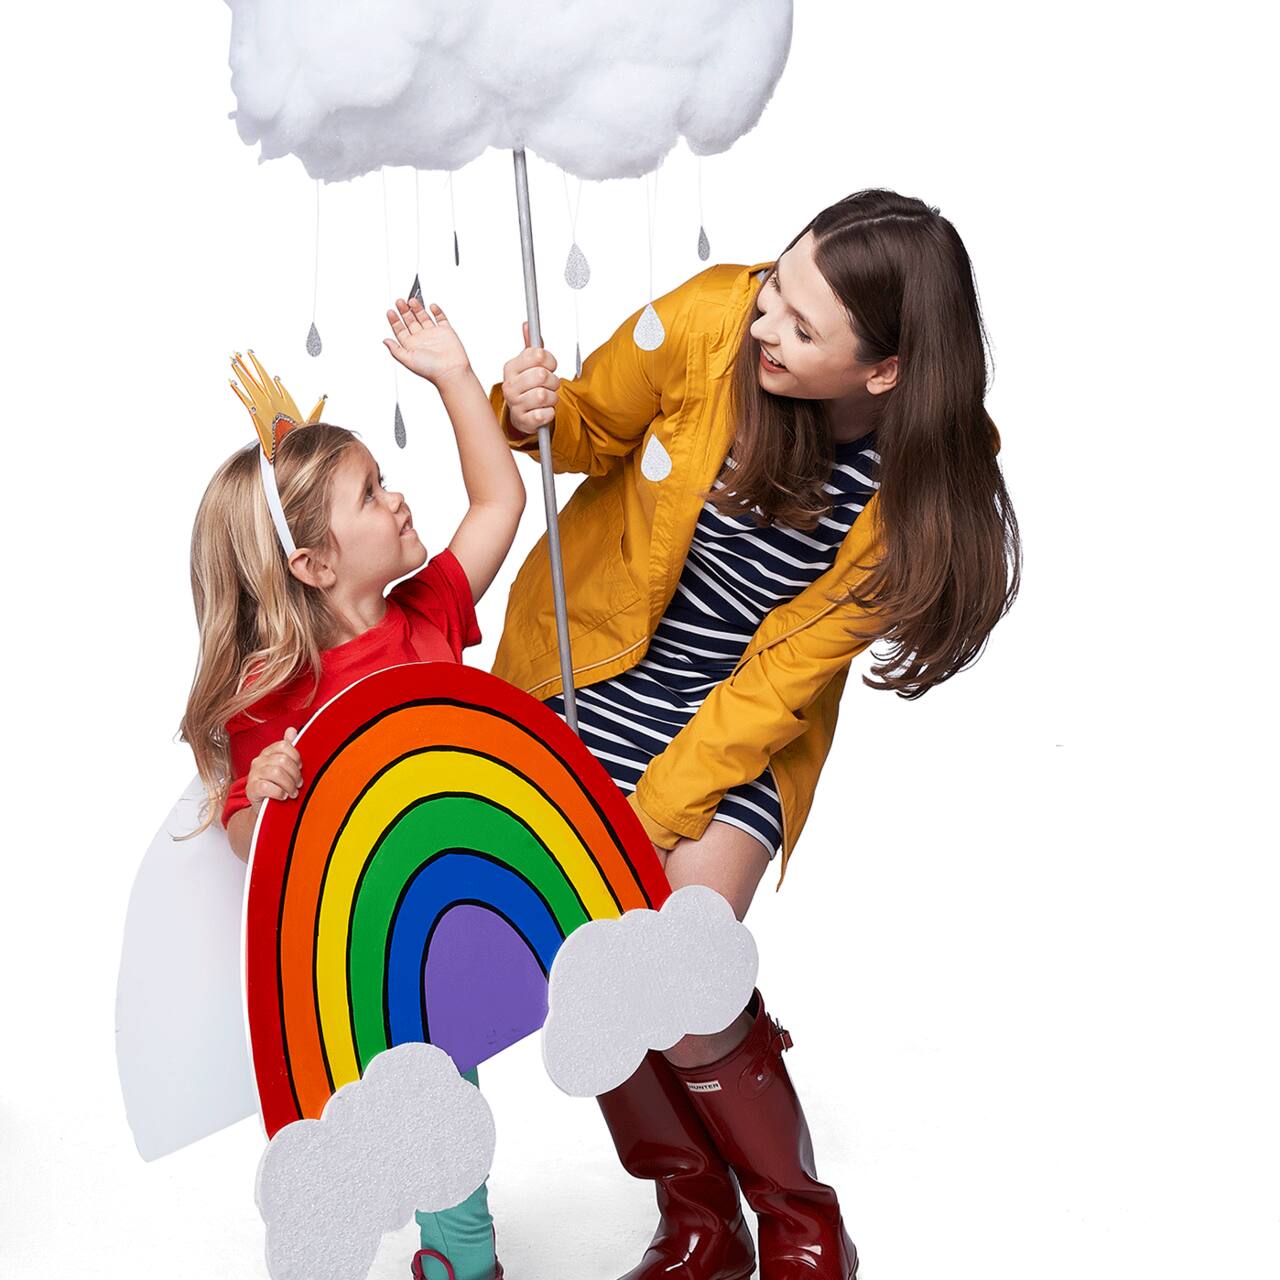 Kids Rainbow Costume